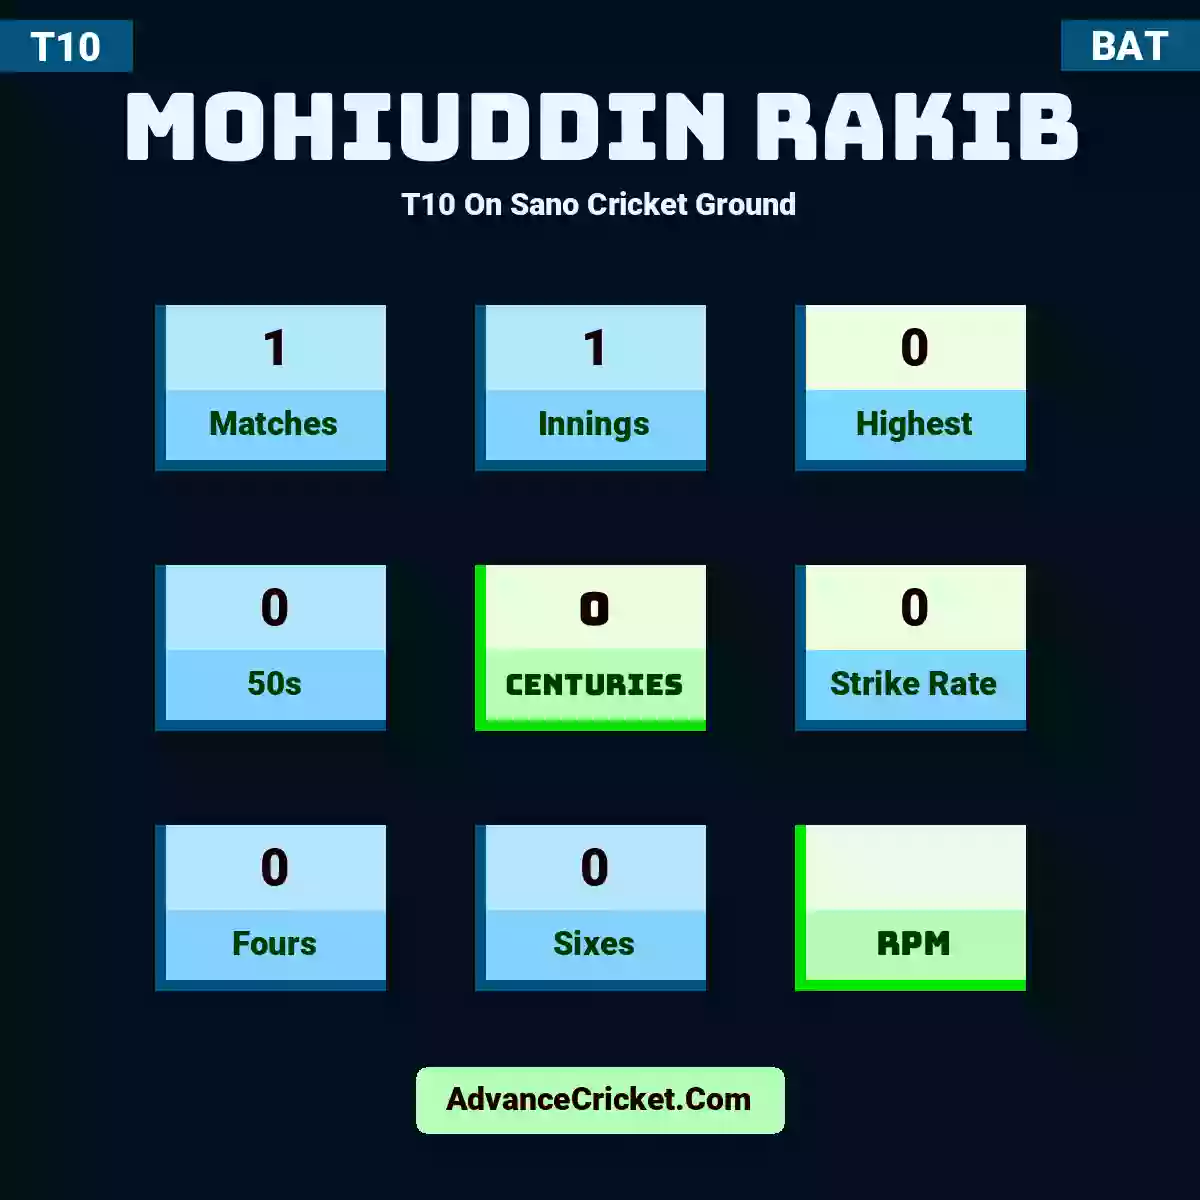 Mohiuddin Rakib T10  On Sano Cricket Ground, Mohiuddin Rakib played 1 matches, scored 0 runs as highest, 0 half-centuries, and 0 centuries, with a strike rate of 0. M.Rakib hit 0 fours and 0 sixes.